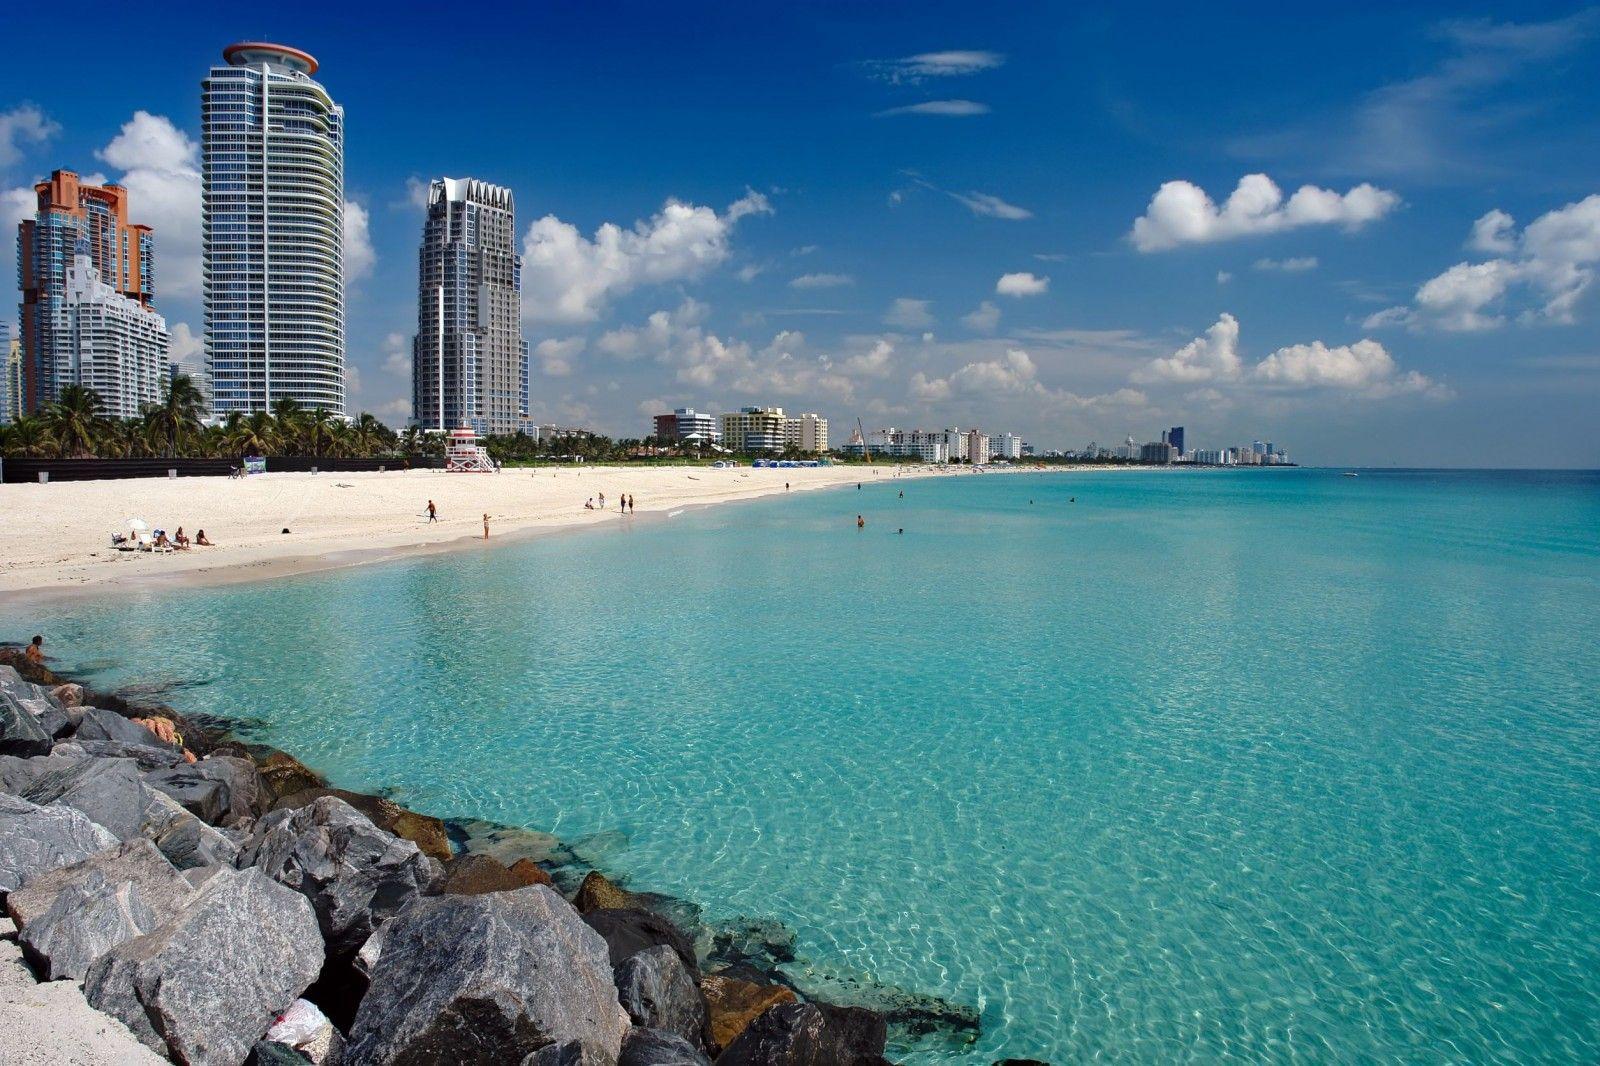 South Beach Miami Wallpaper 1080p. I HD Image